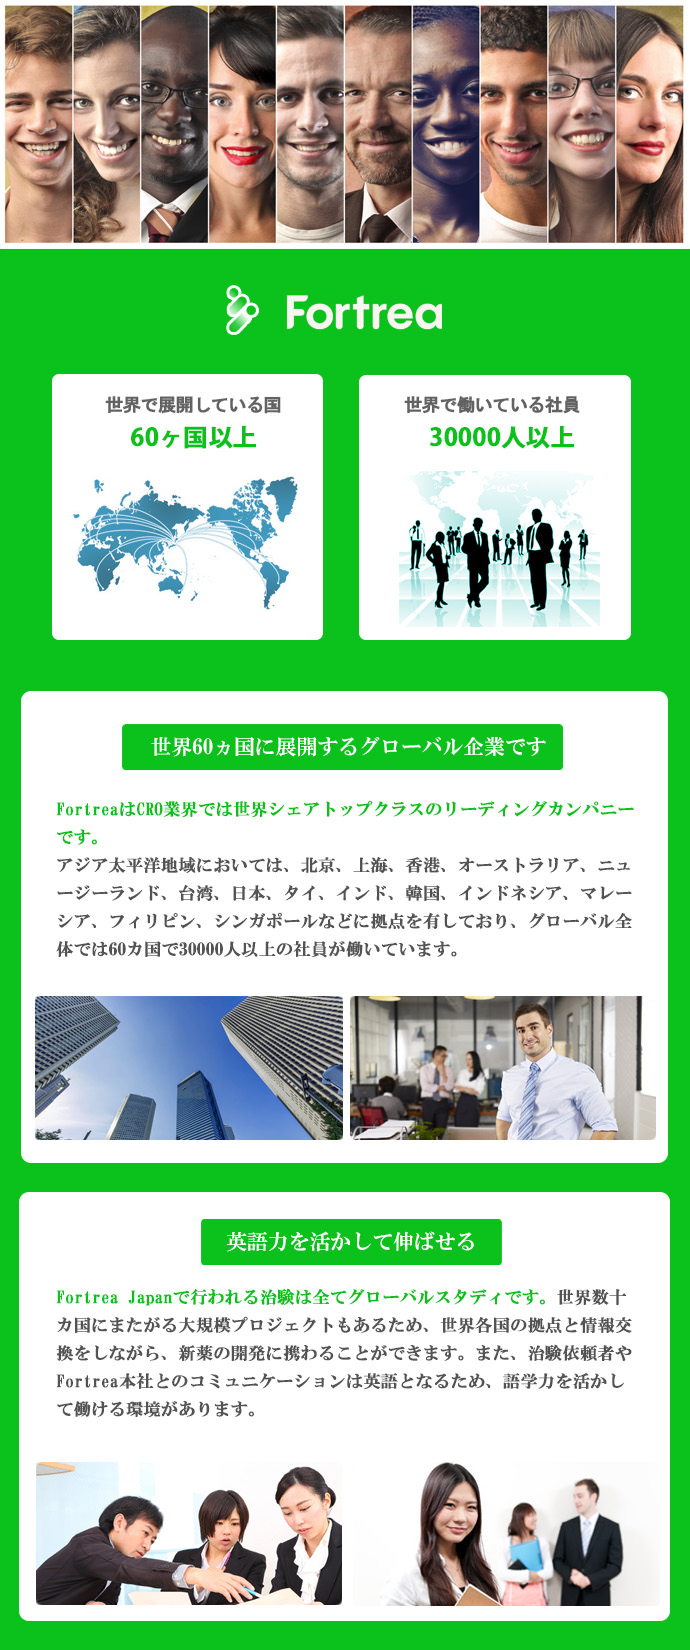 Fortrea Japan株式会社